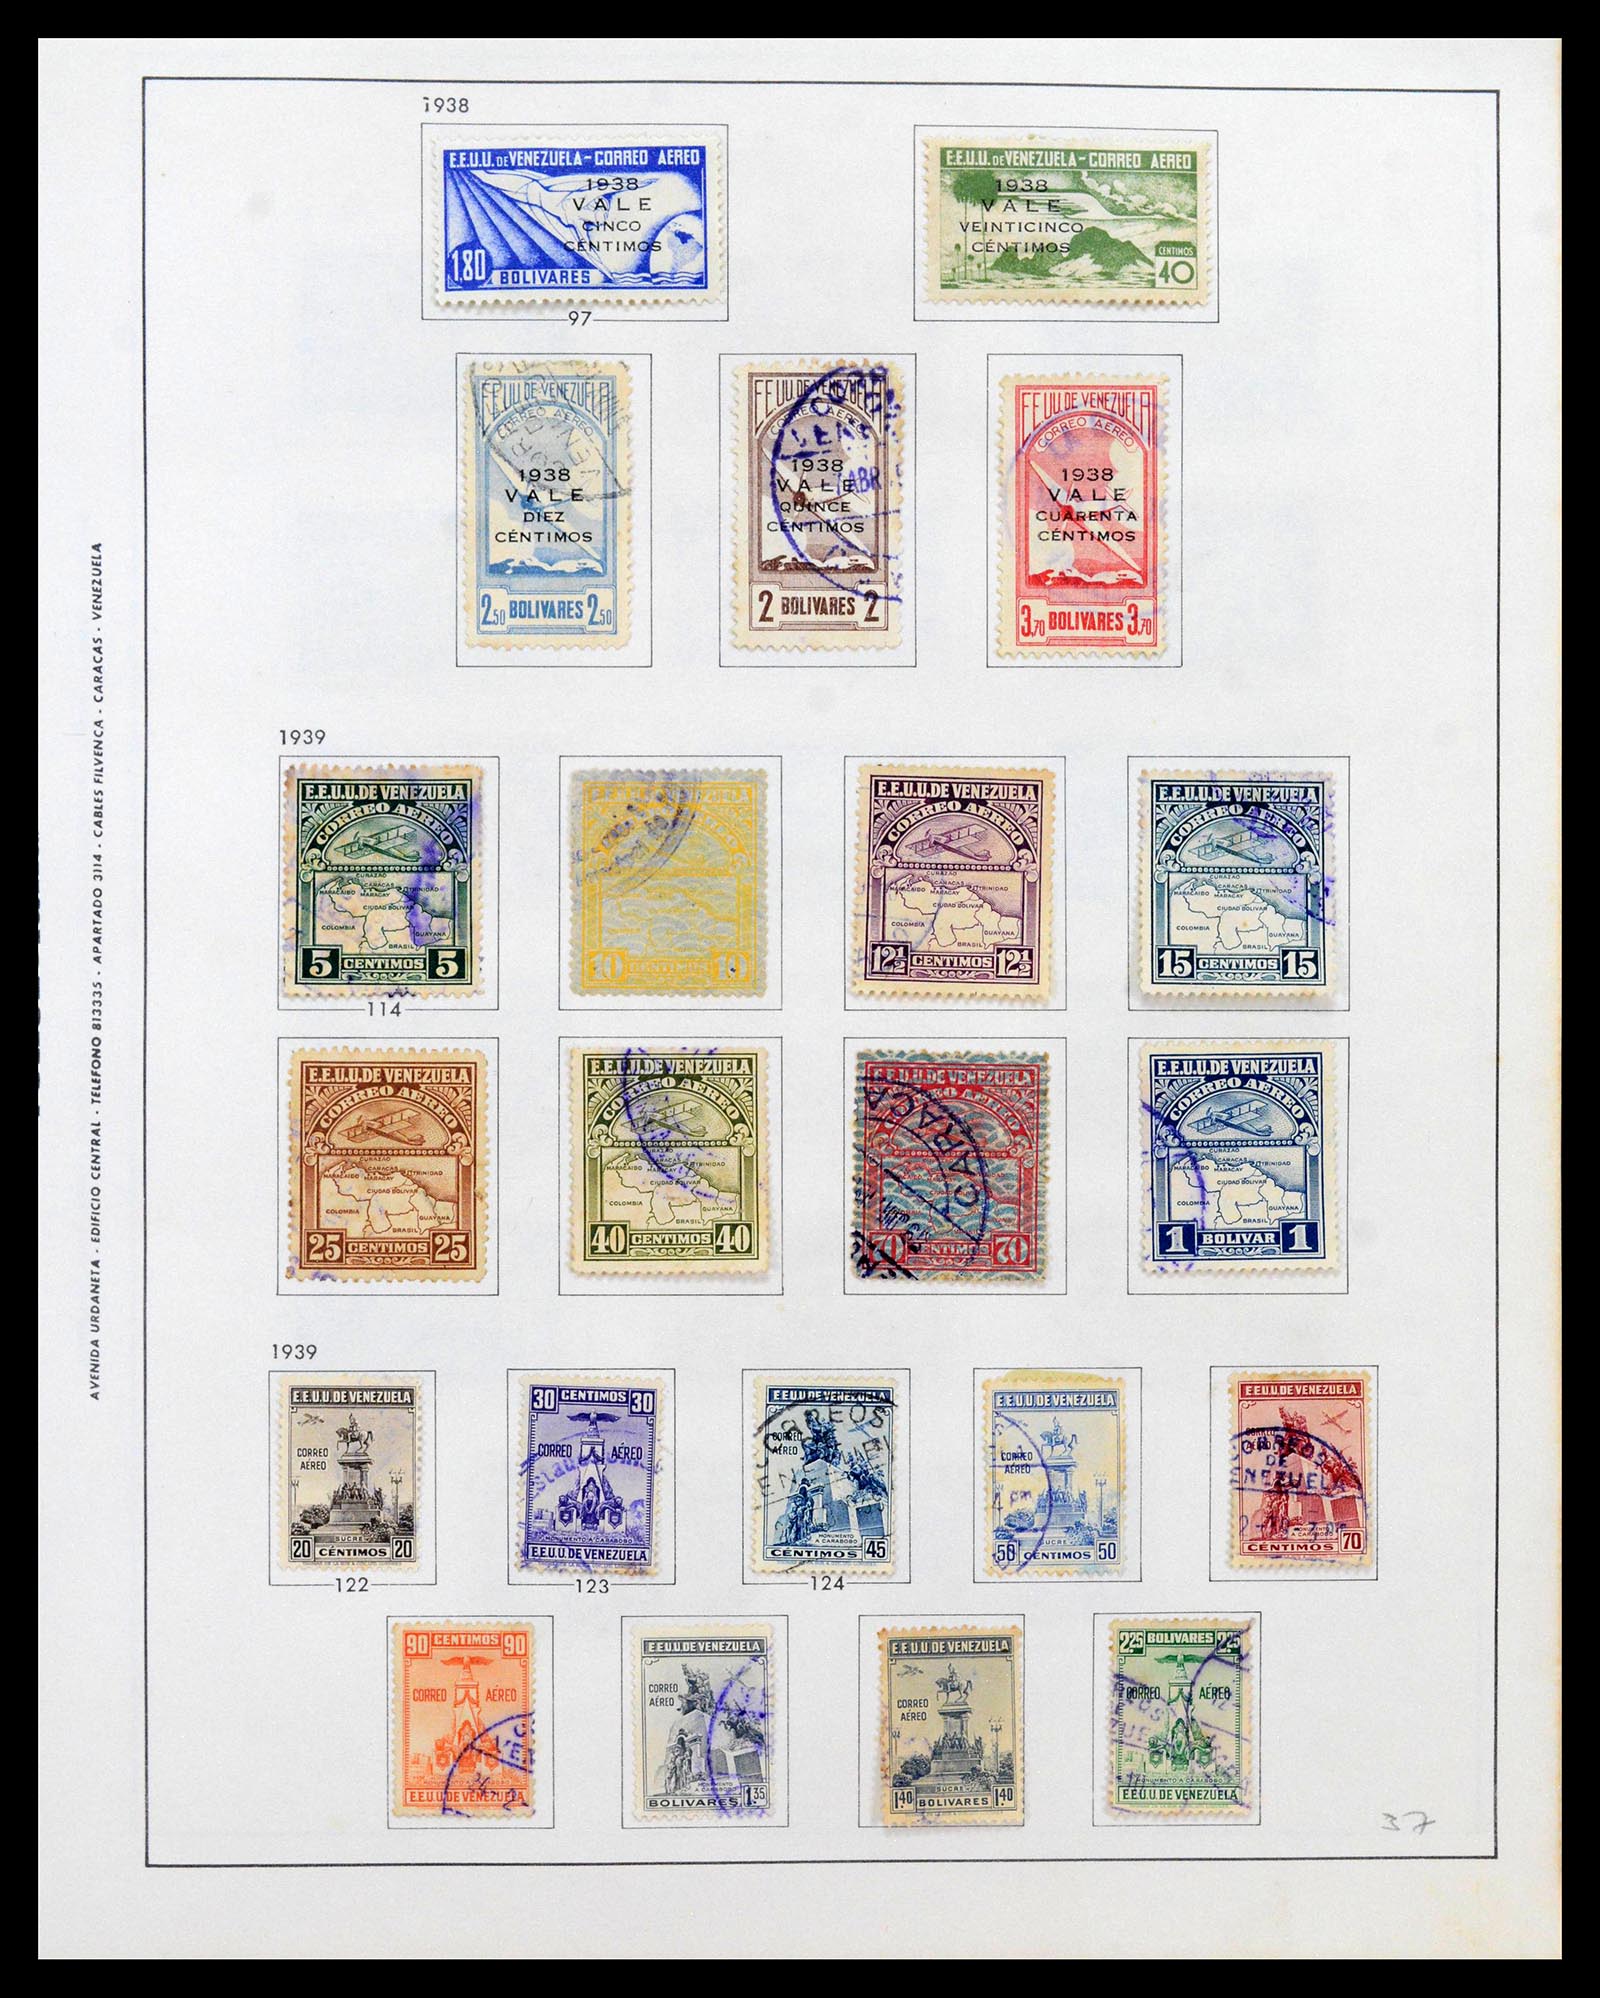 39436 0006 - Stamp collection 39436 Venezuela 1859-1985.